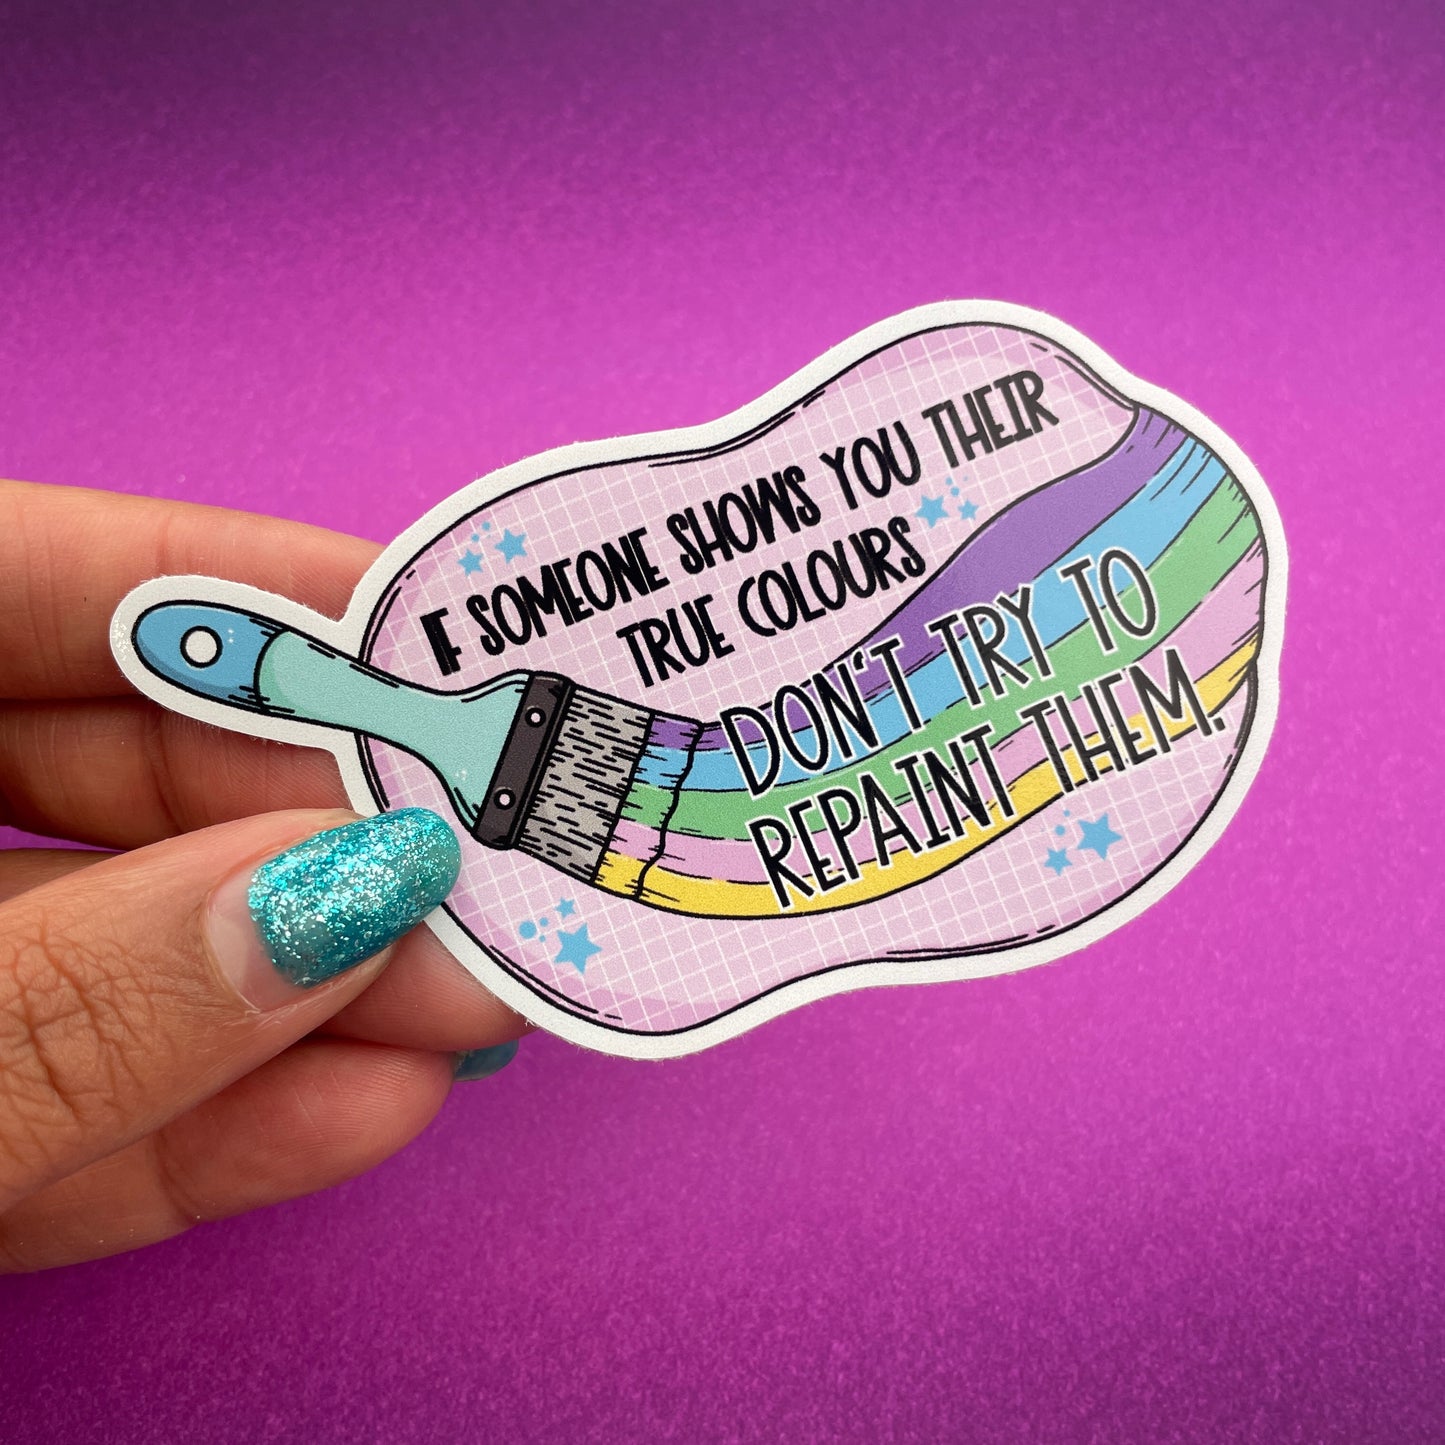 Don’t repaint them  - relatable quotes - mental health - vinyl sticker